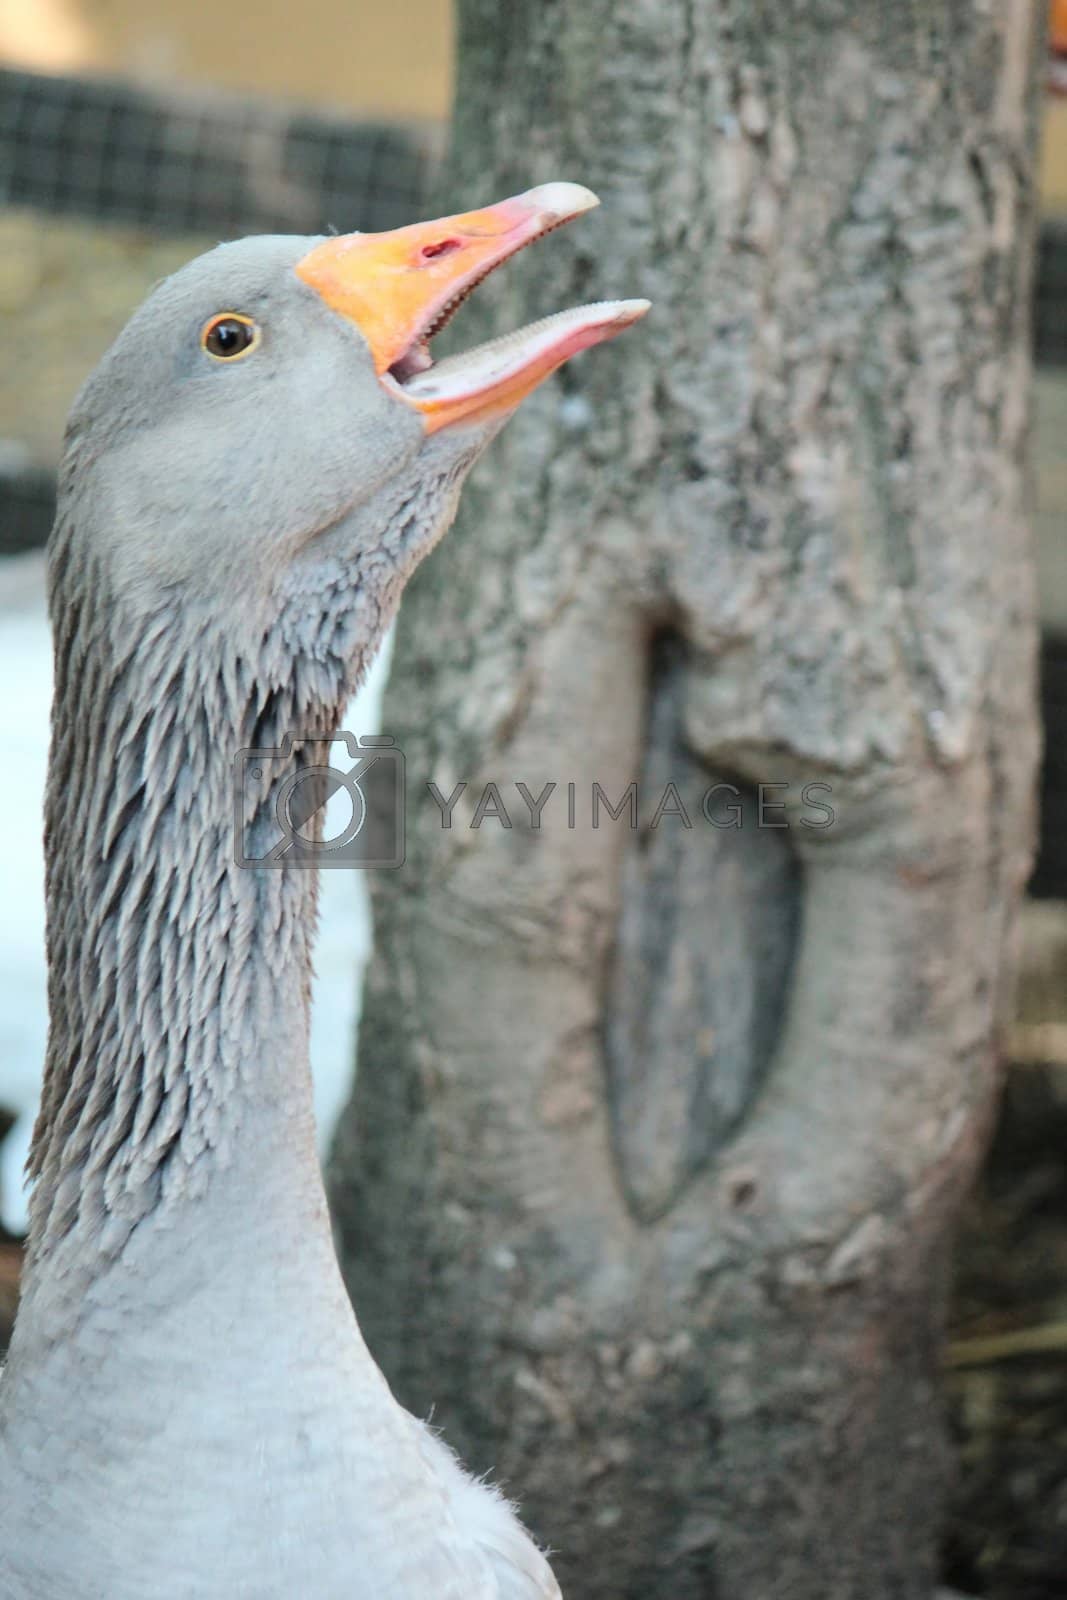 Royalty free image of Goose beak open by Elenaphotos21